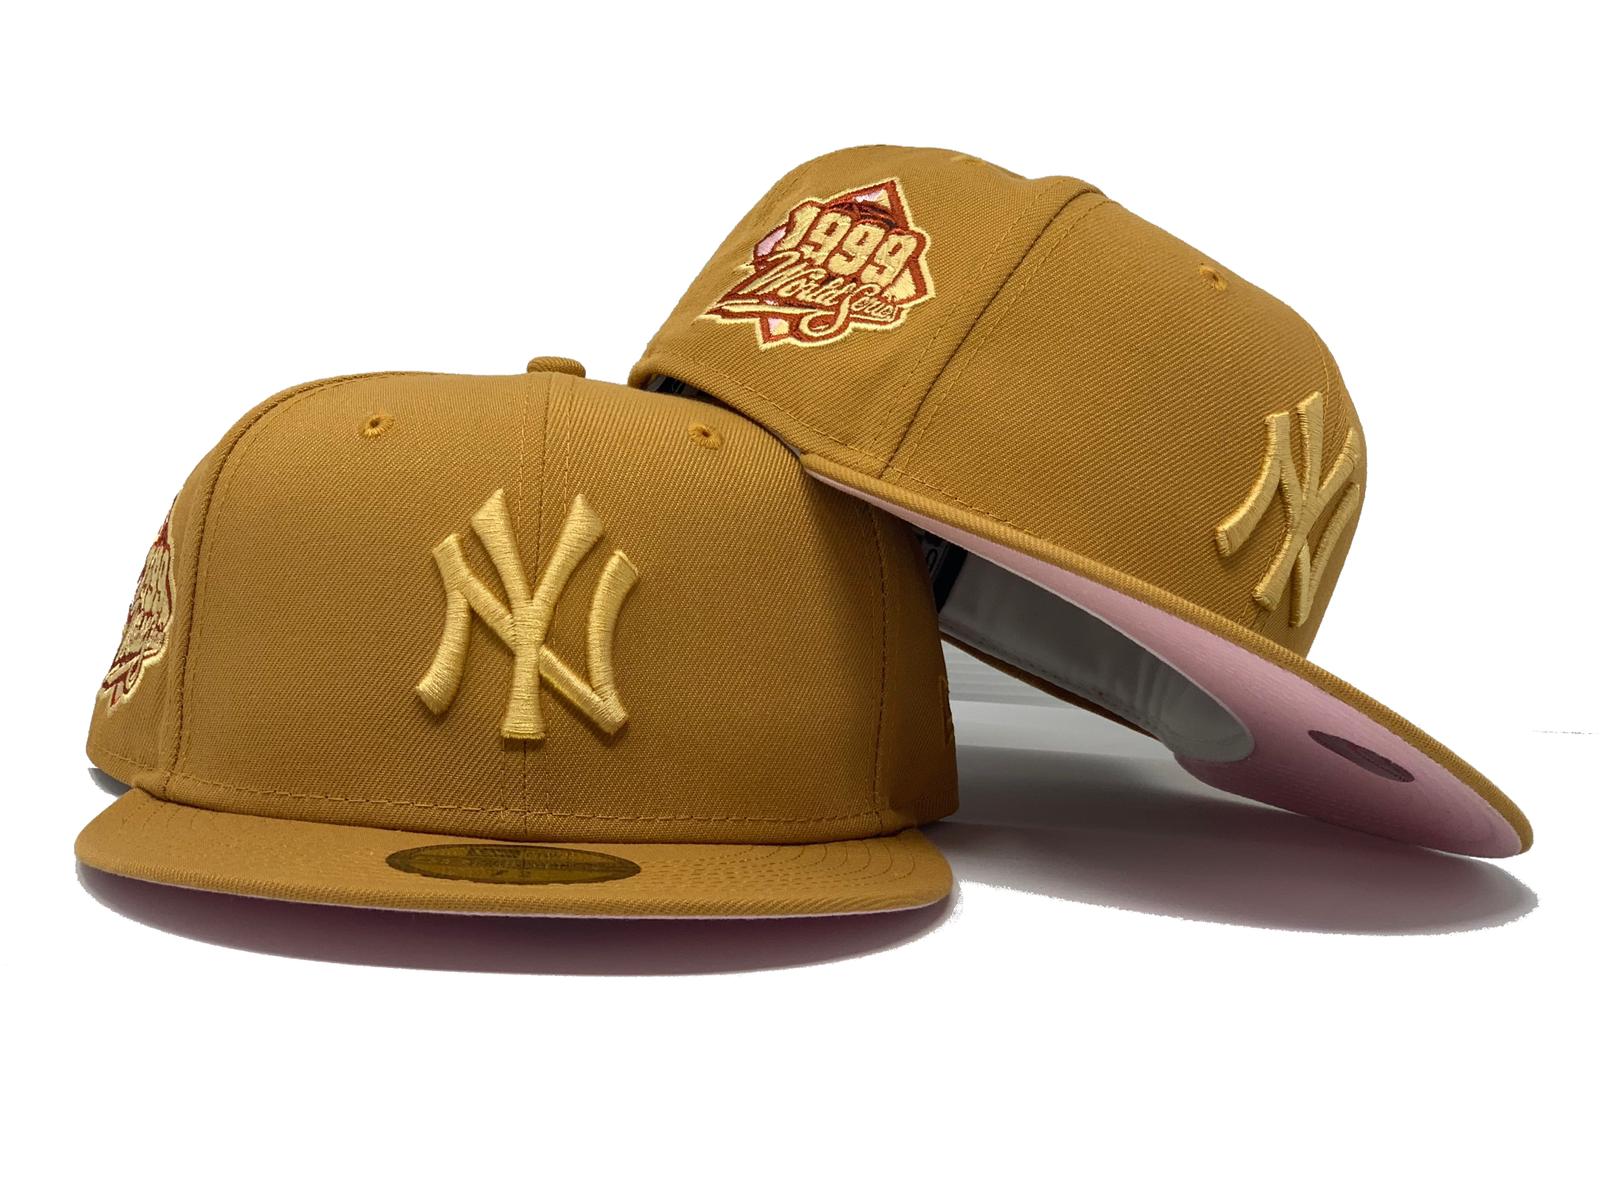 New Era - New York Yankees 9FORTY Cap - Wheat